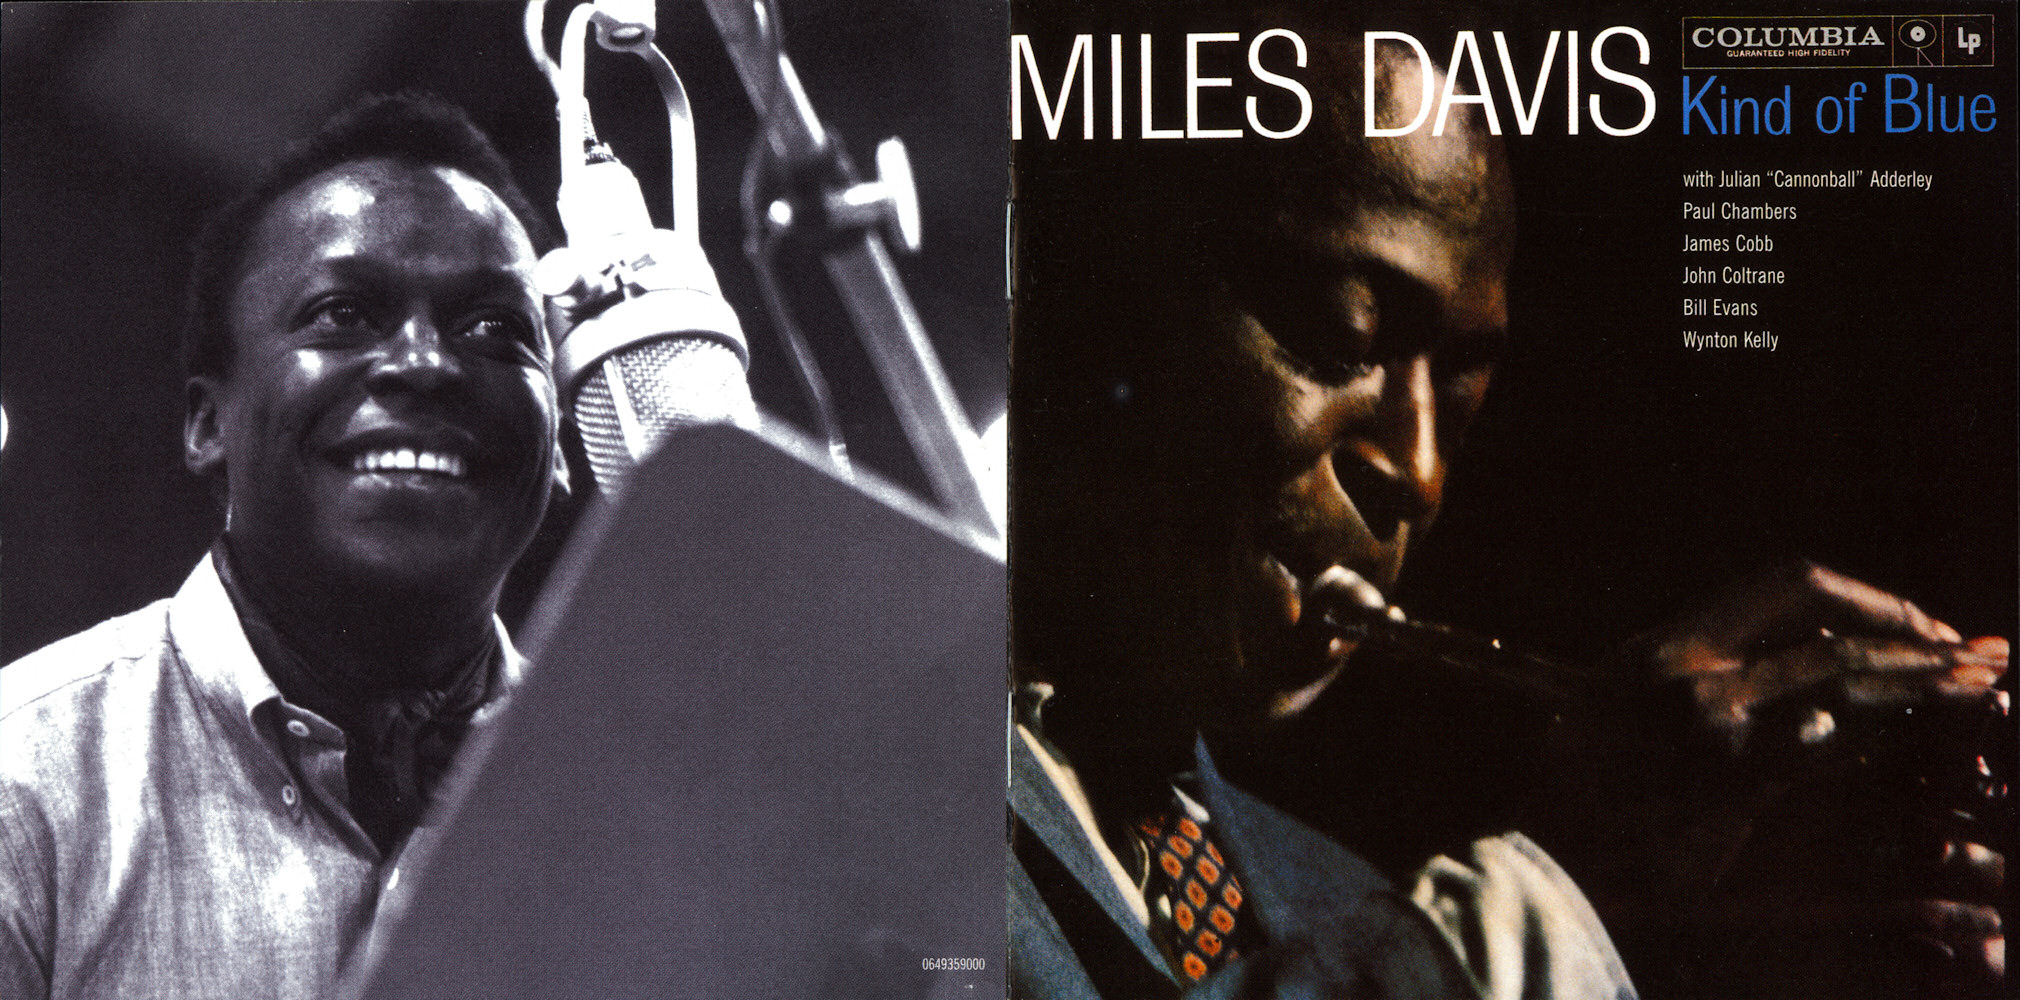 Different kind песня перевод. Kind of Blue Майлз Дэвис. Miles Davis - kind of Blue (1959). Miles Davis - kind of Blue (Full album) 1959. Miles Davis kind of Blue обложка.